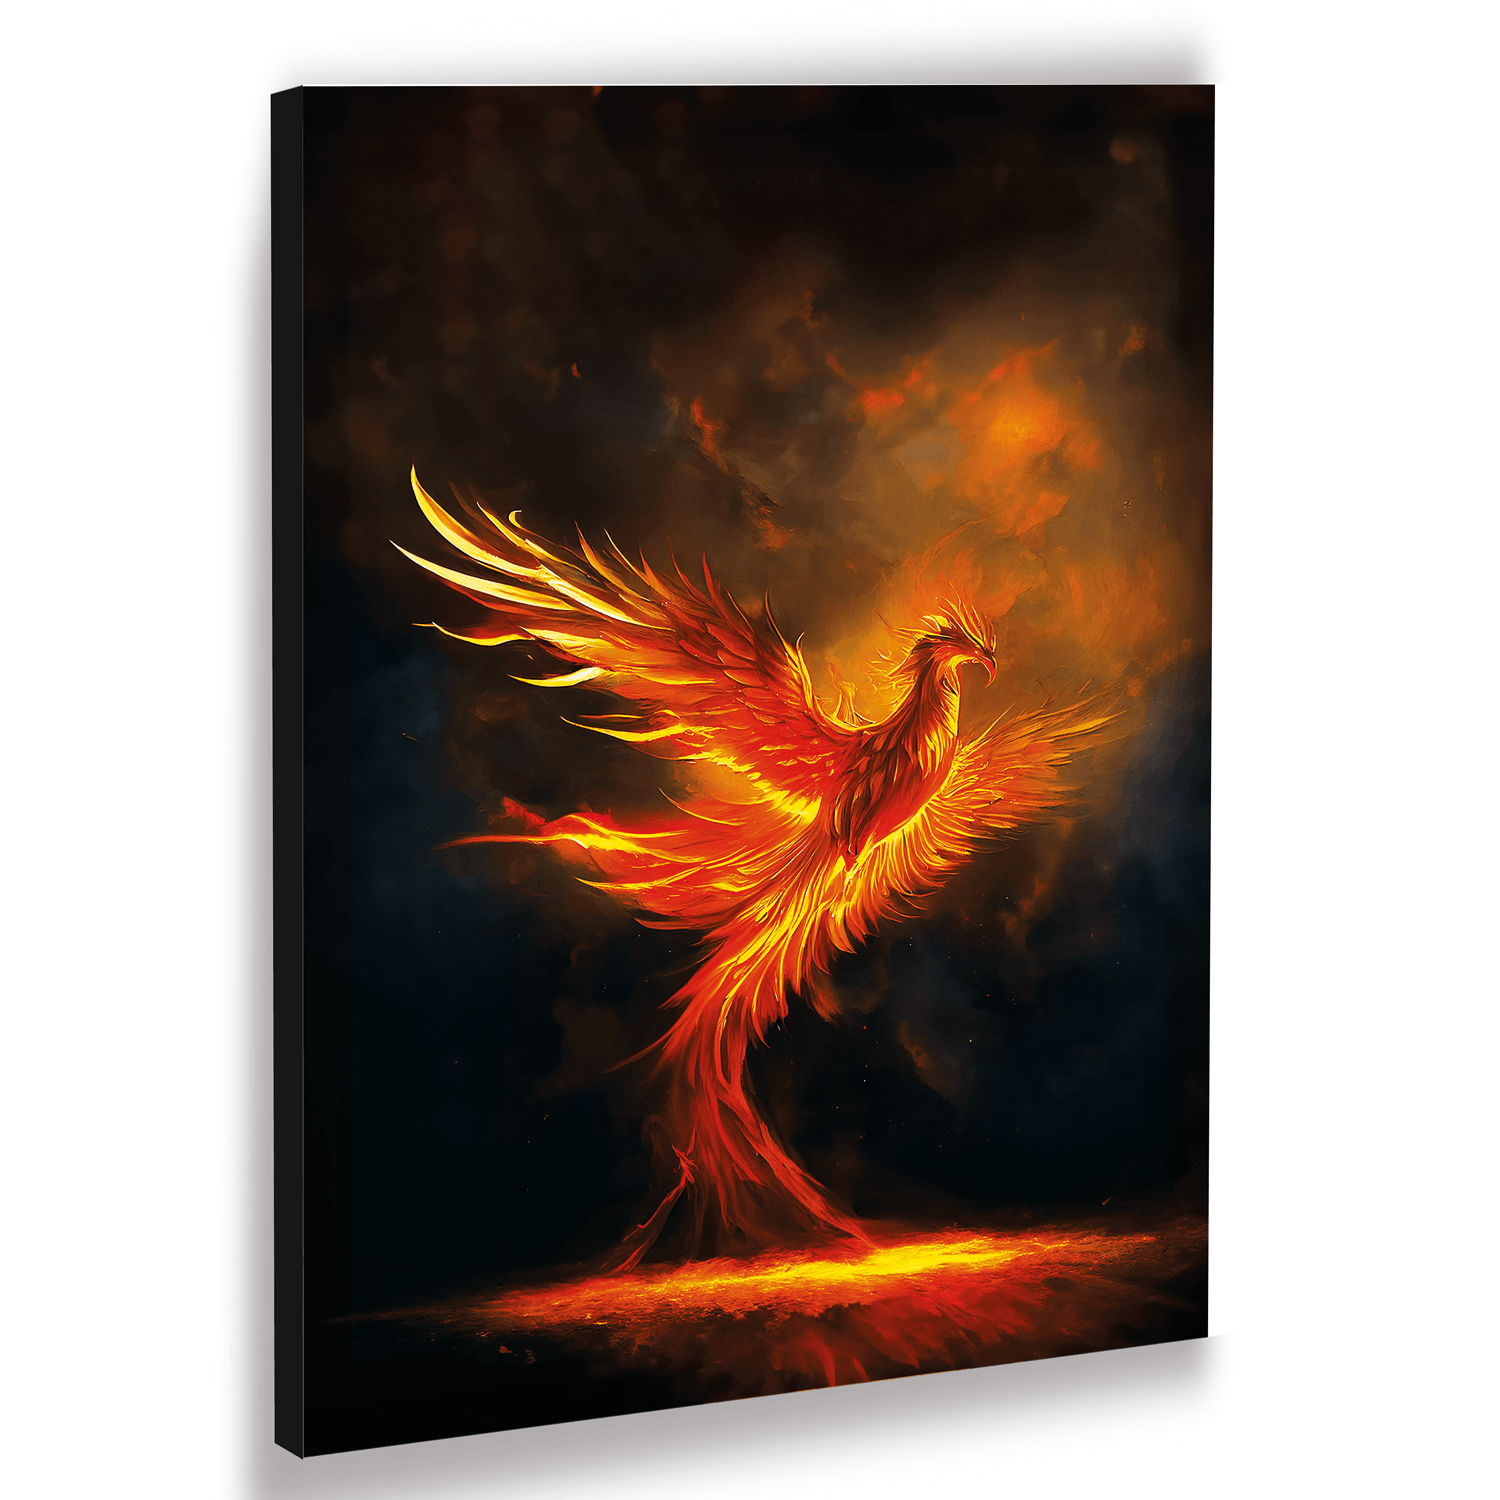 Yanan Anka Kuşu-Burning Phoenix